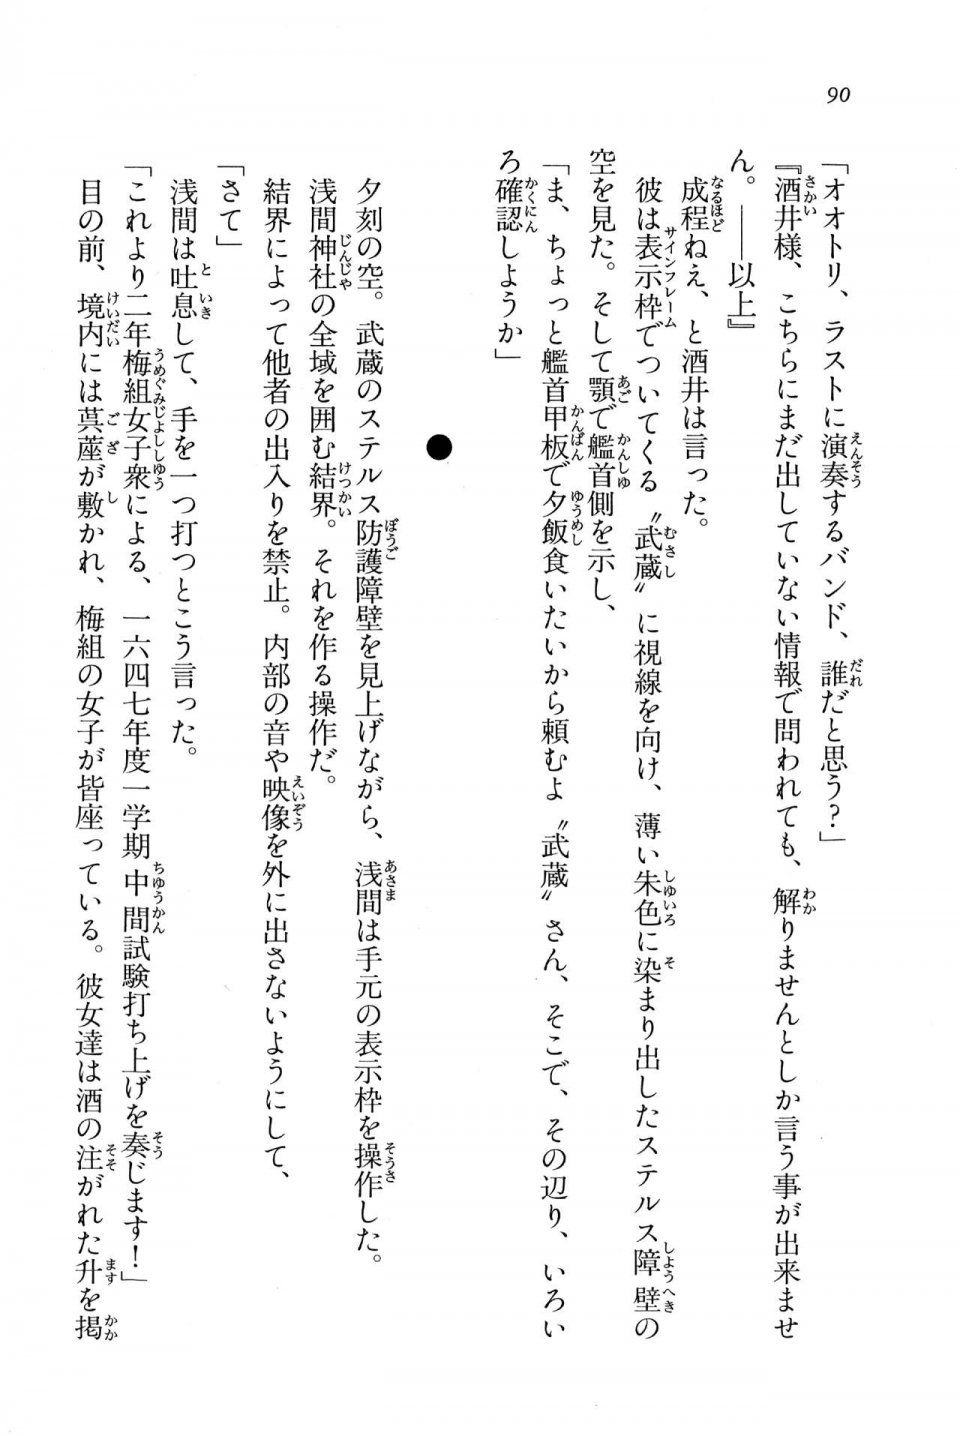 Kyoukai Senjou no Horizon BD Special Mininovel Vol 7(4A) - Photo #94